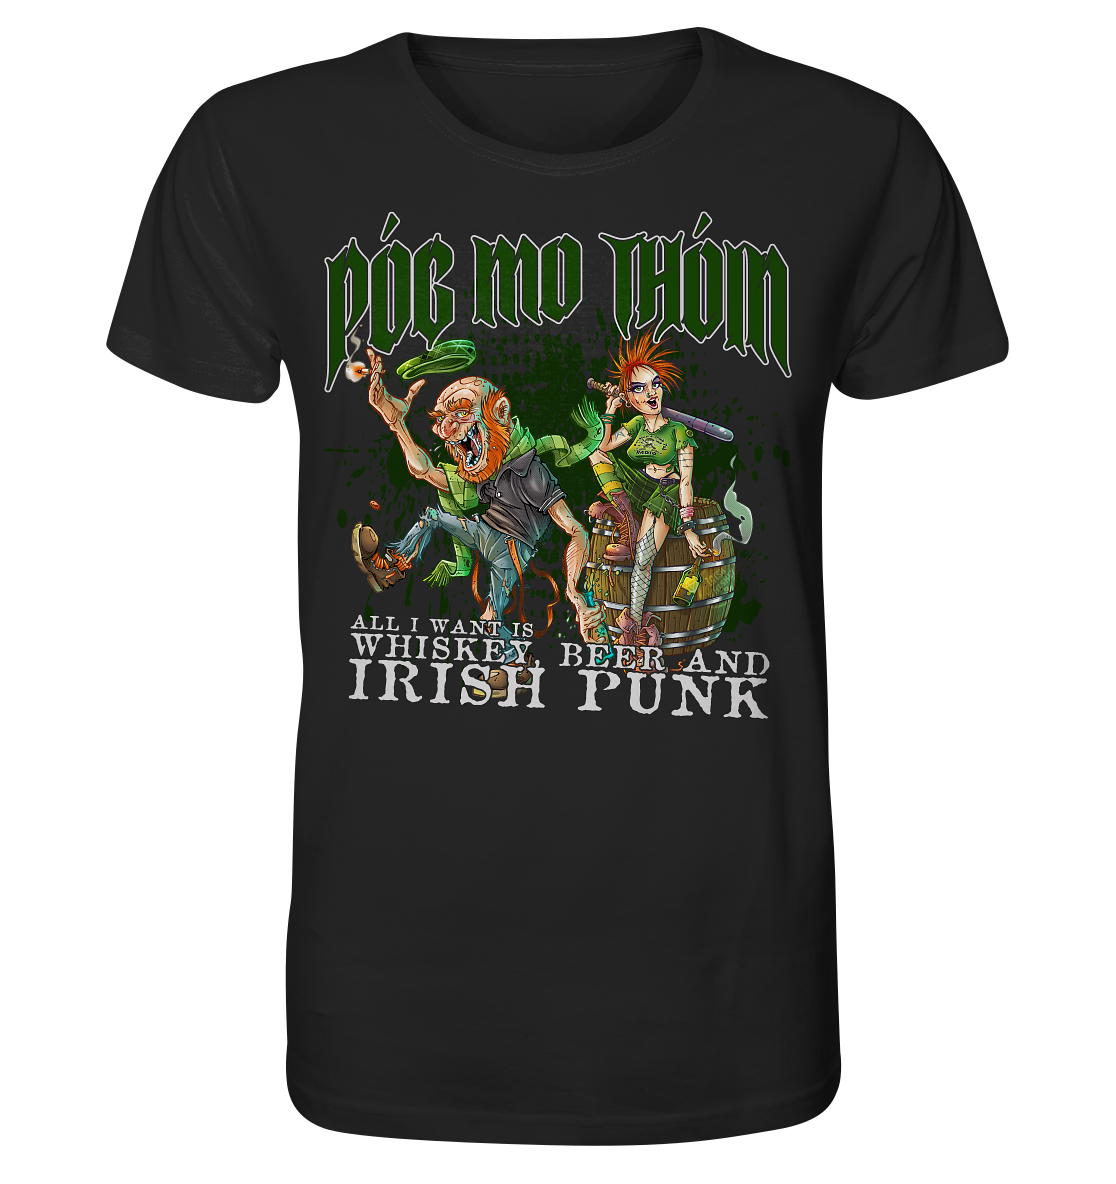 Póg Mo Thóin Streetwear "Whiskey, Beer and Irish Punk" - Organic Shirt